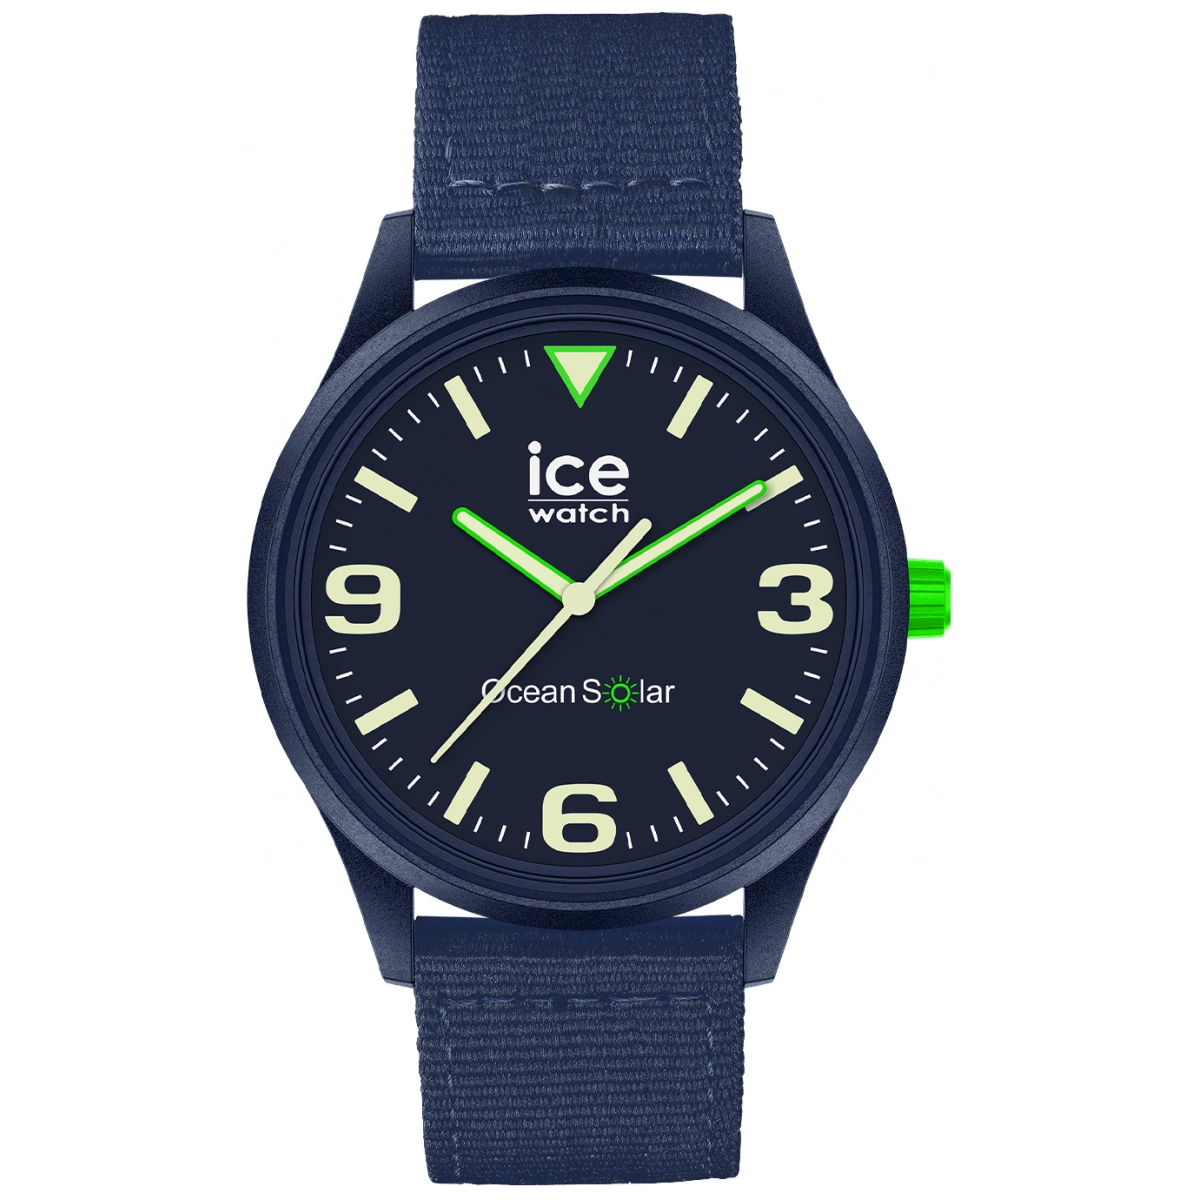 RELOJ ANALOGICO DE UNISEX ICE 019648 Ice watch